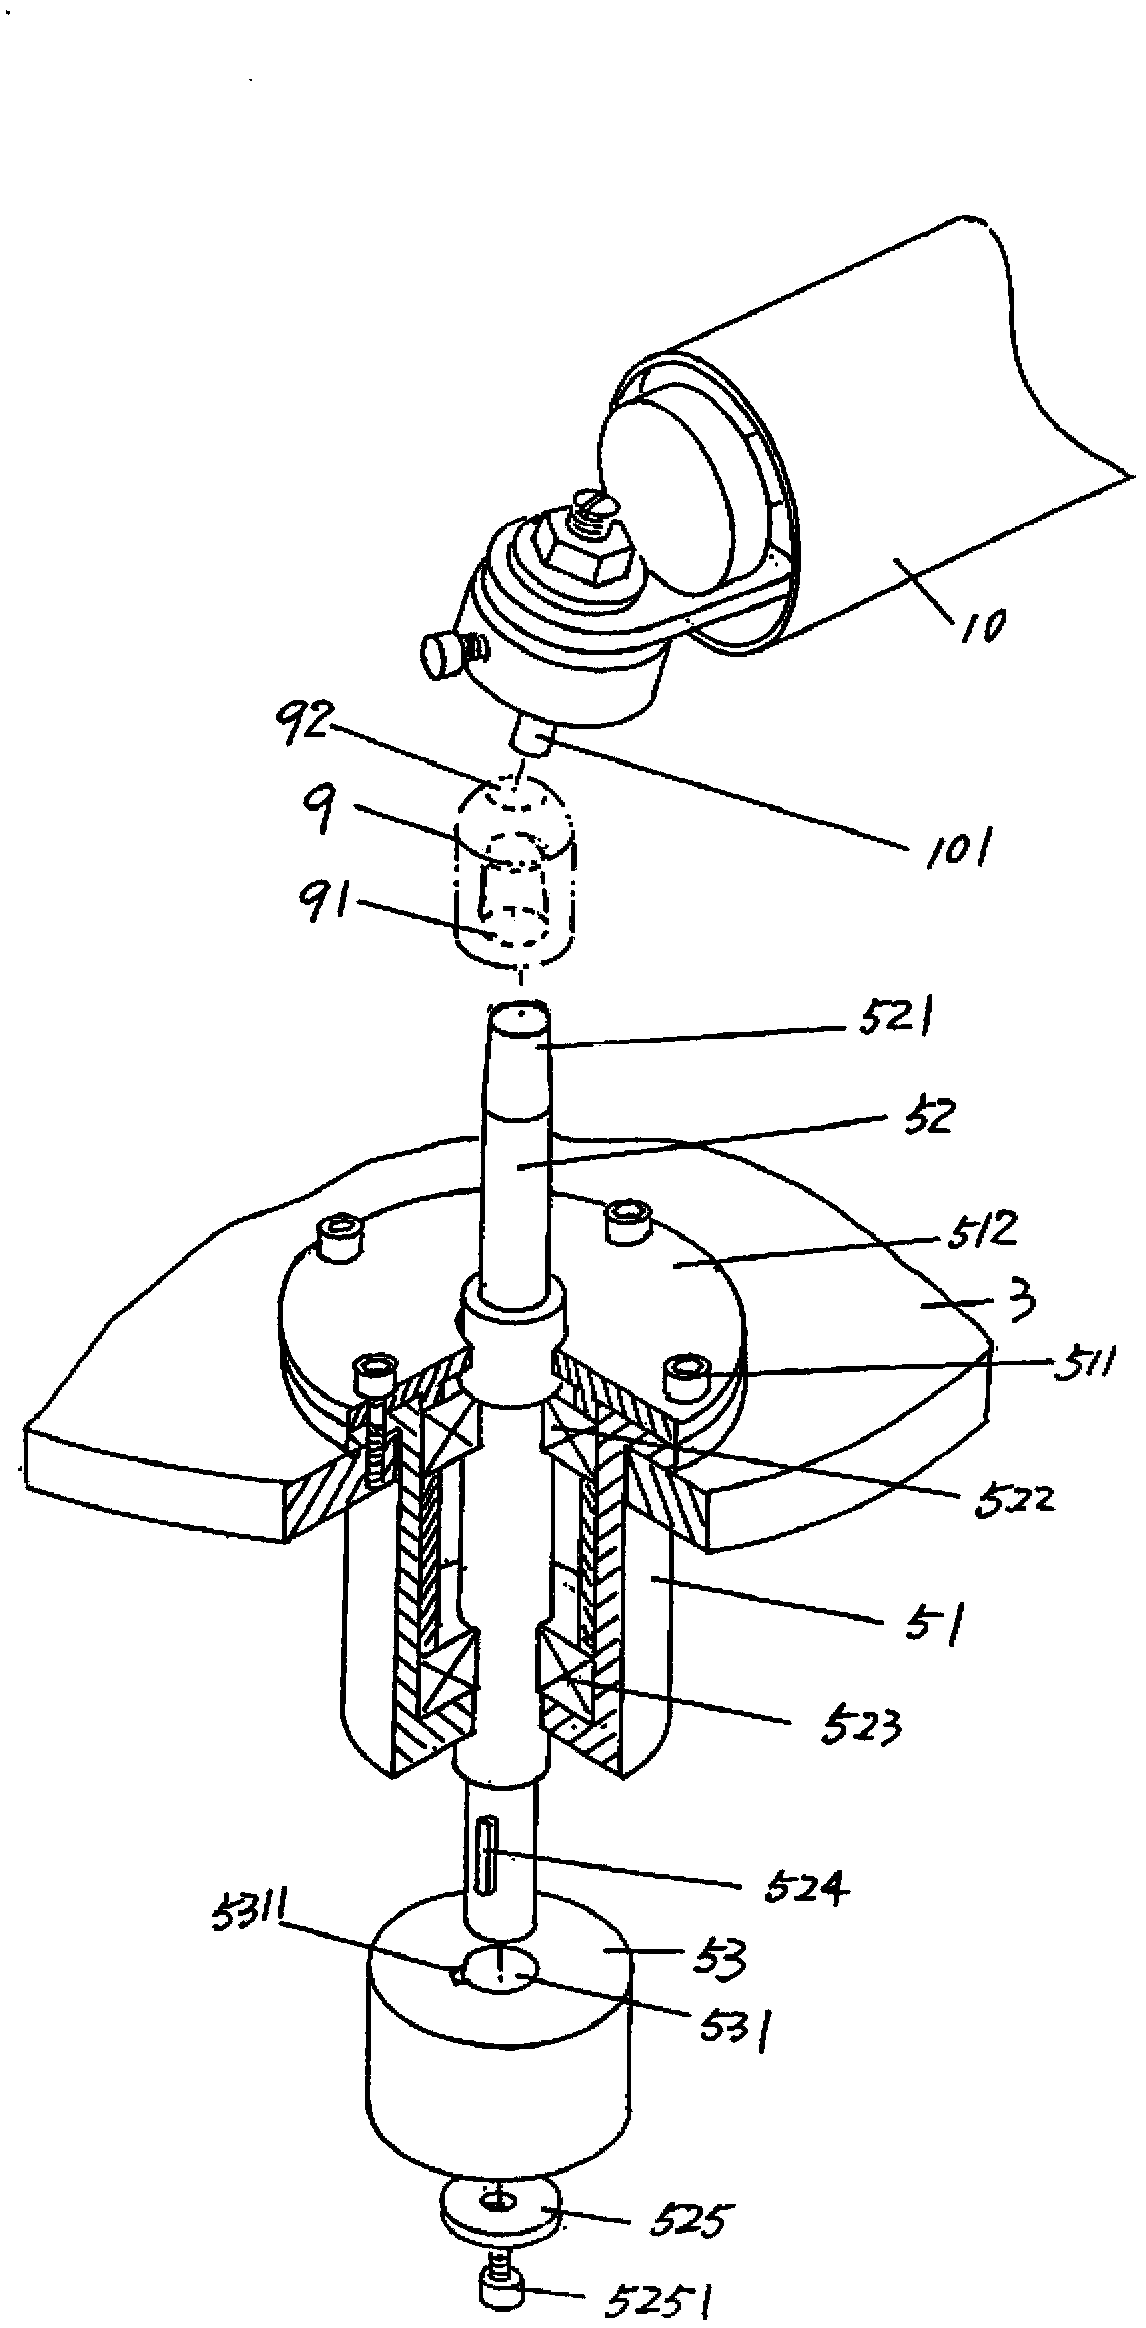 Semi-automatic electrode cap surfacing machine